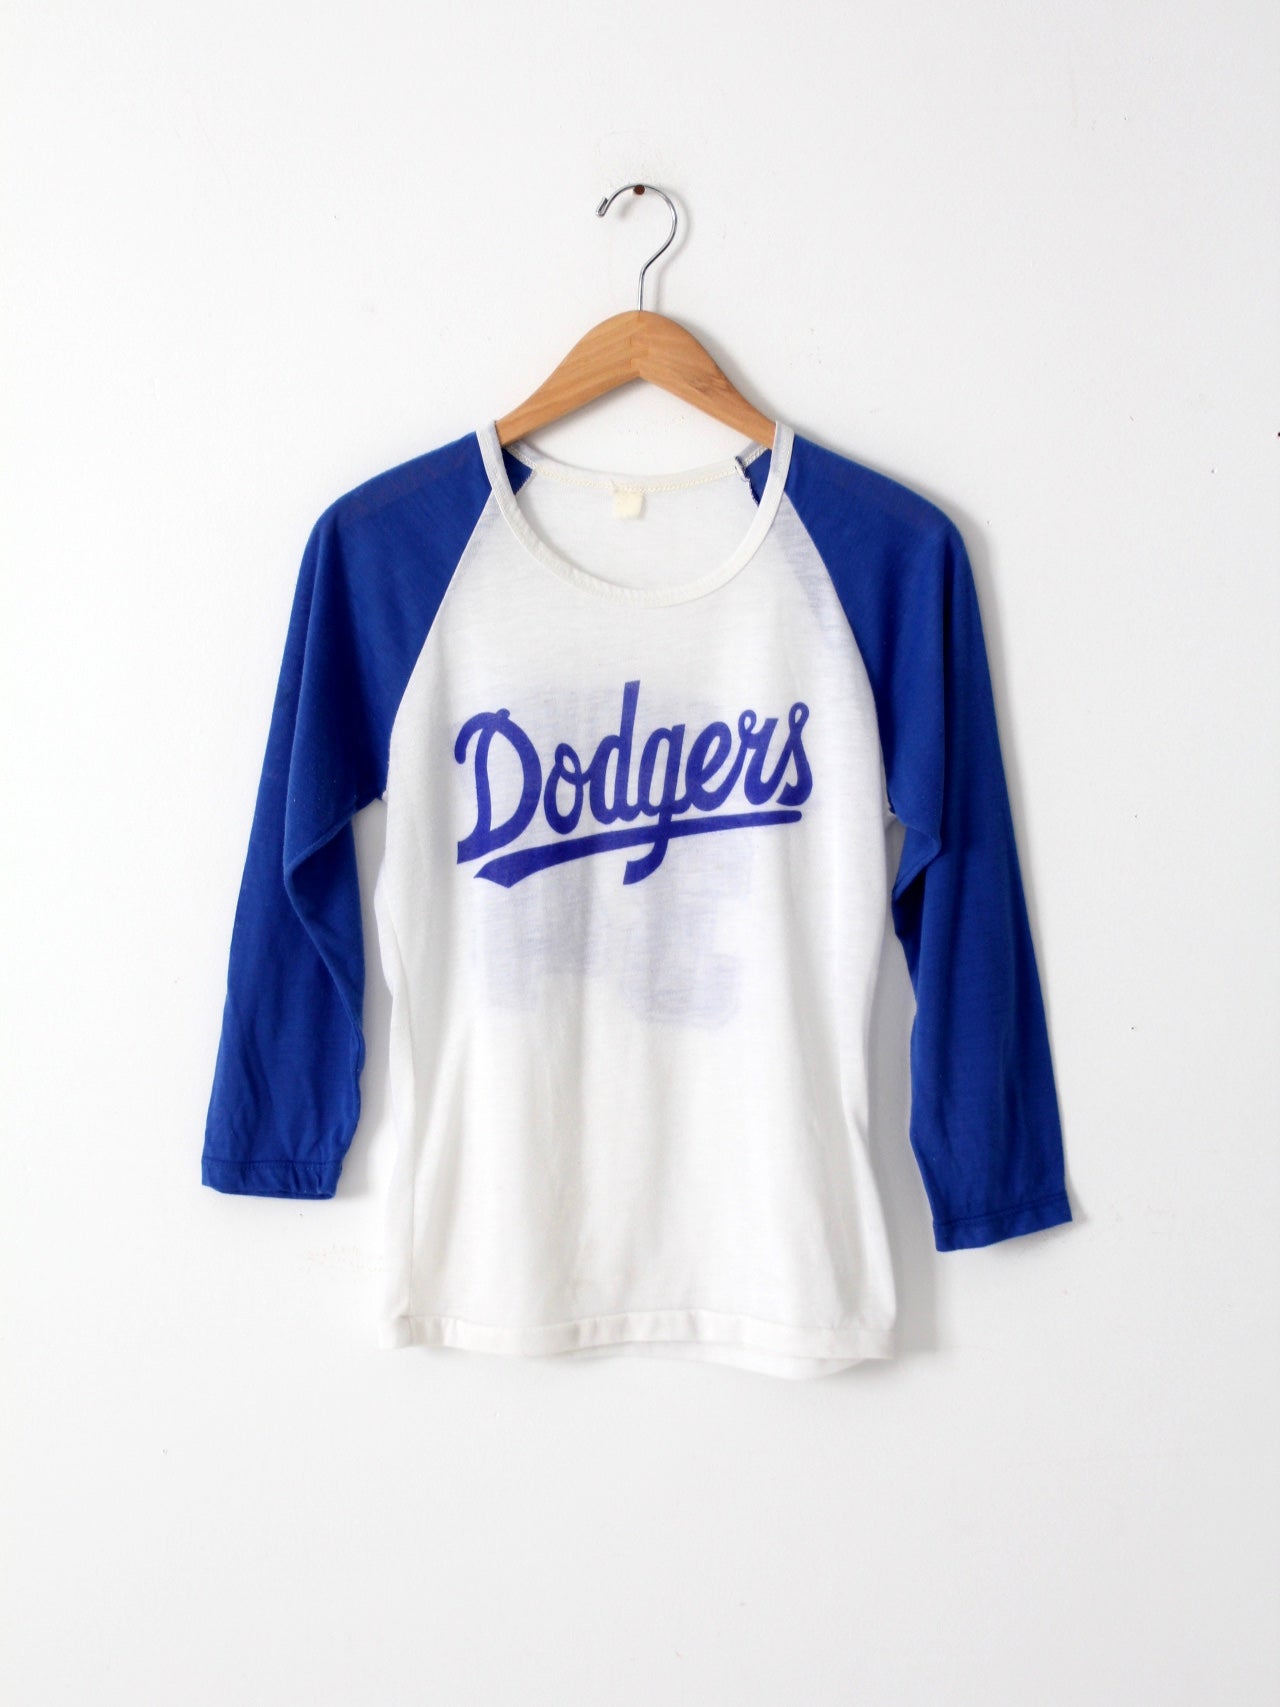 Dodger Dogs Since 1962 T-Shirt, Baseball Shirt, Vintage Baseball Tee